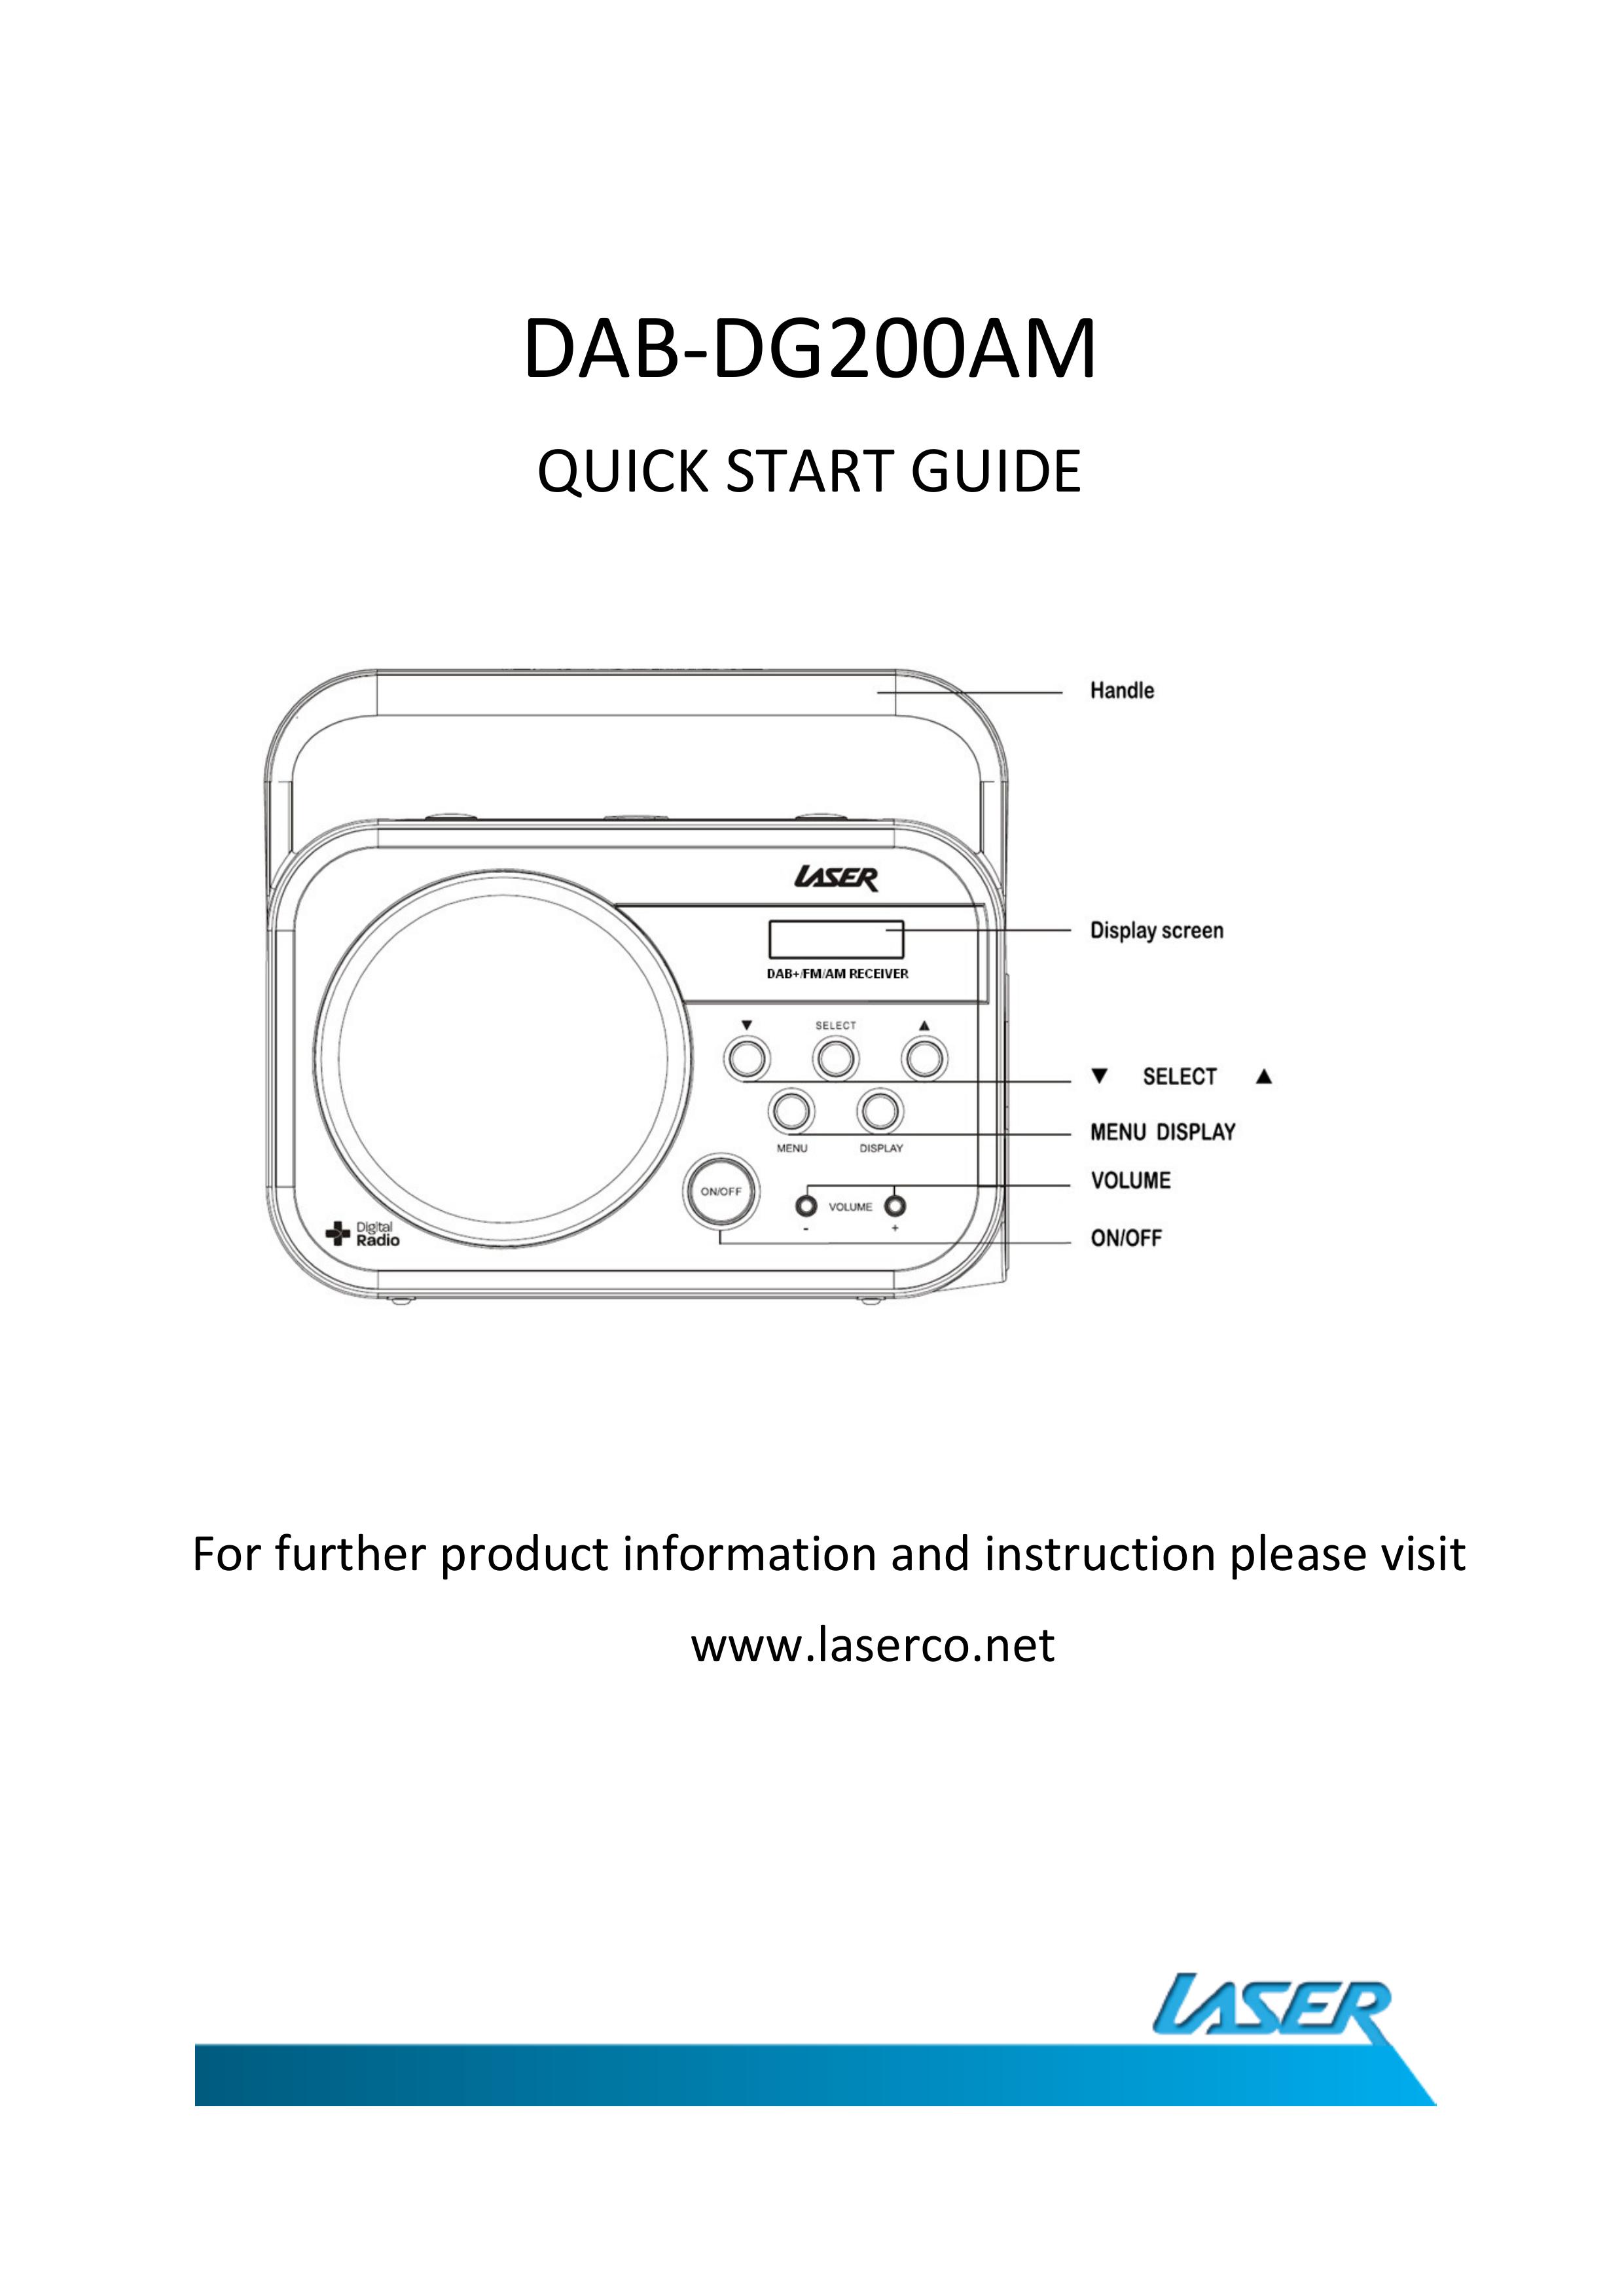 Laser DAB-DG200AM Clock Radio User Manual (Page 1)